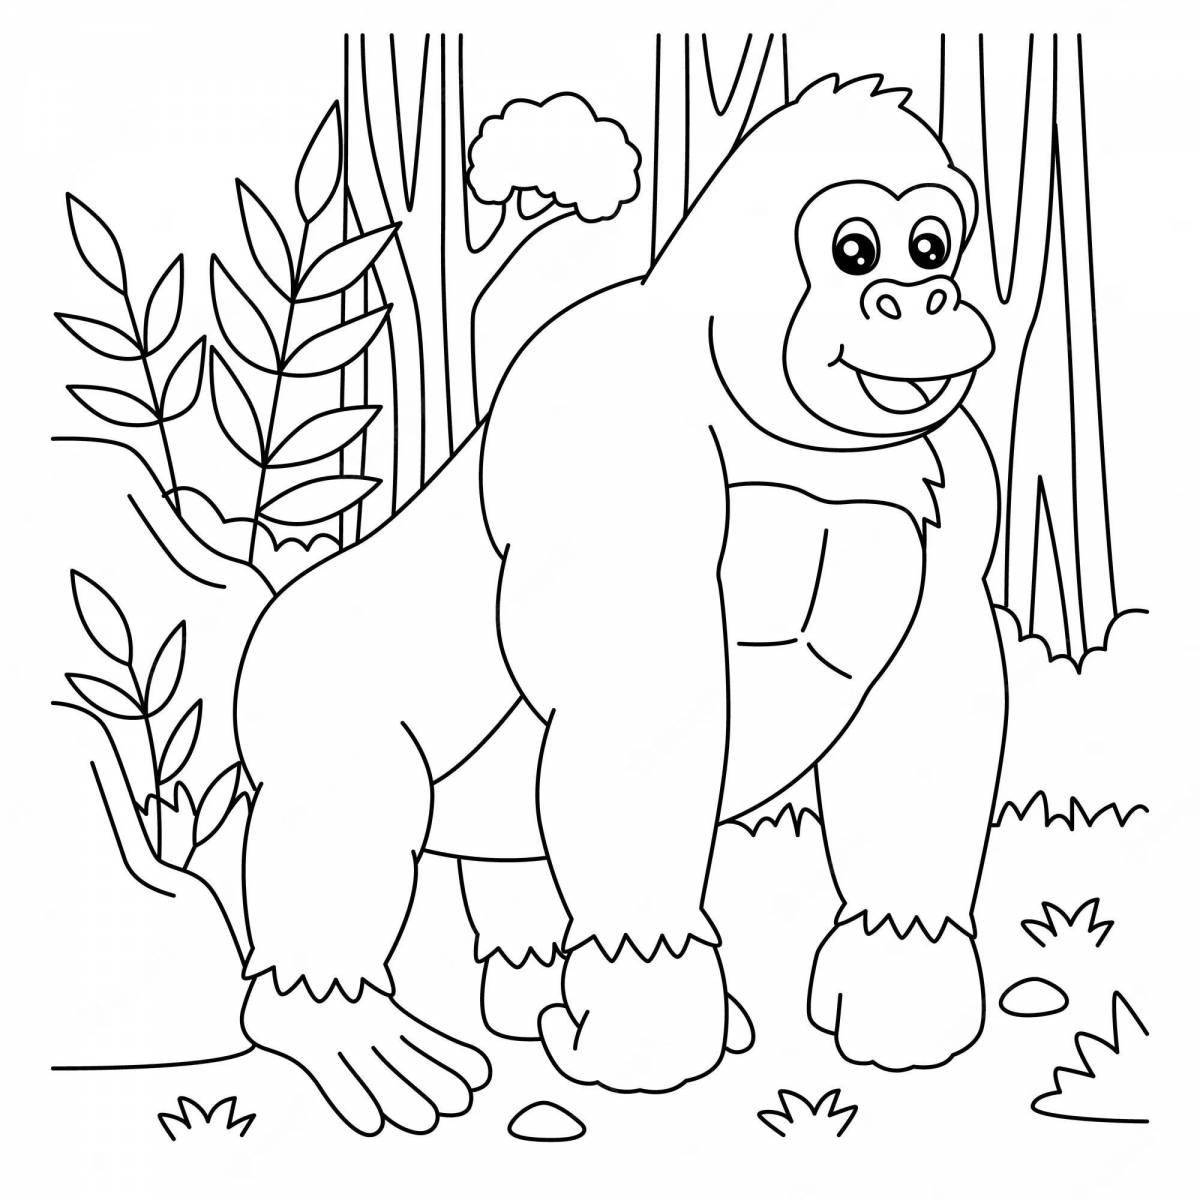 Joyful gorilla coloring book for kids